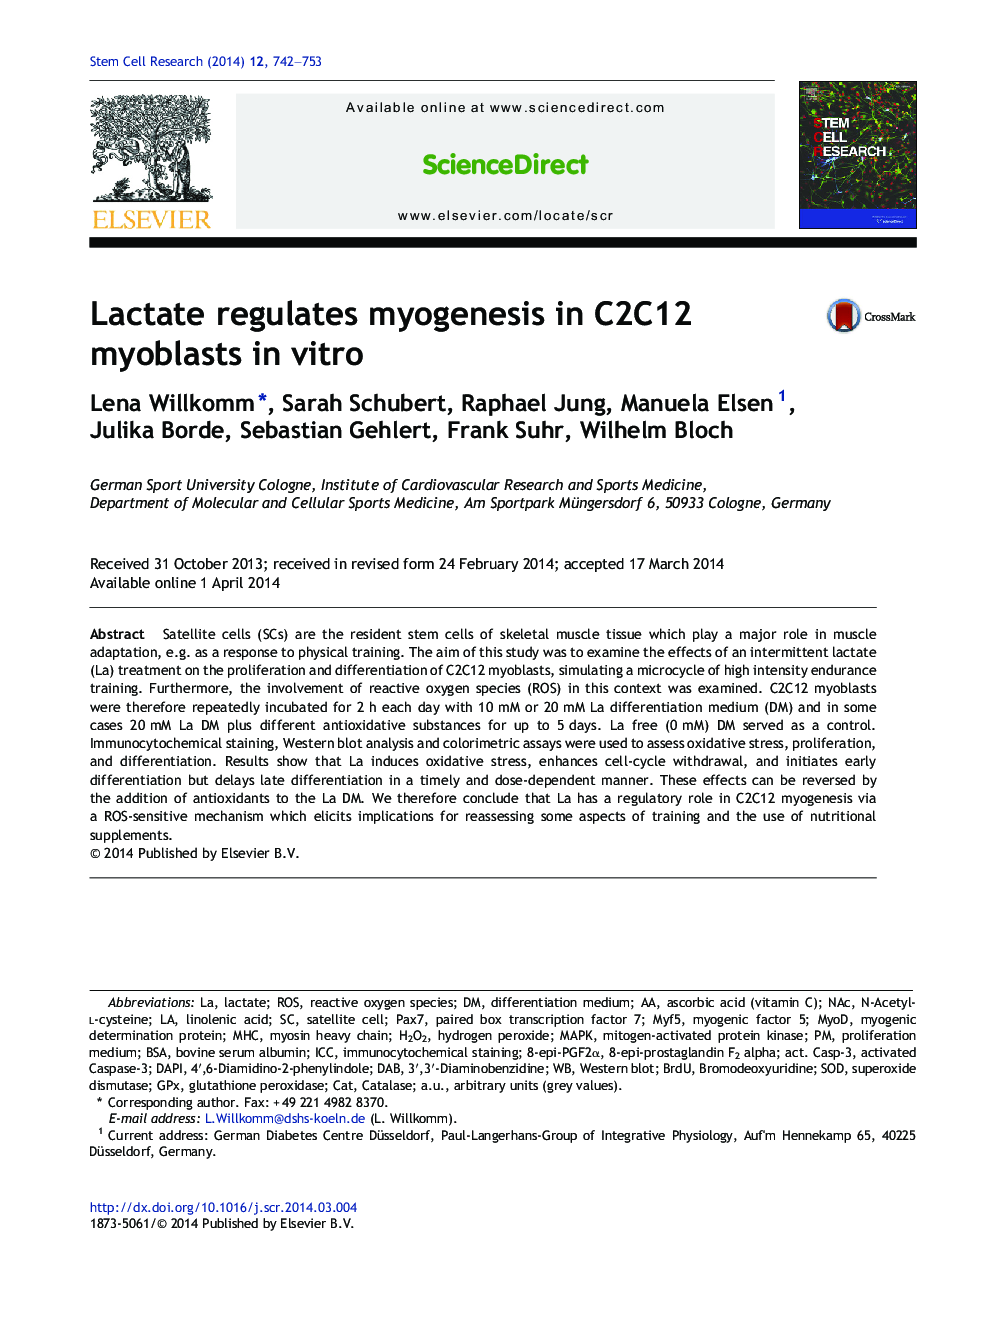 Lactate regulates myogenesis in C2C12 myoblasts in vitro